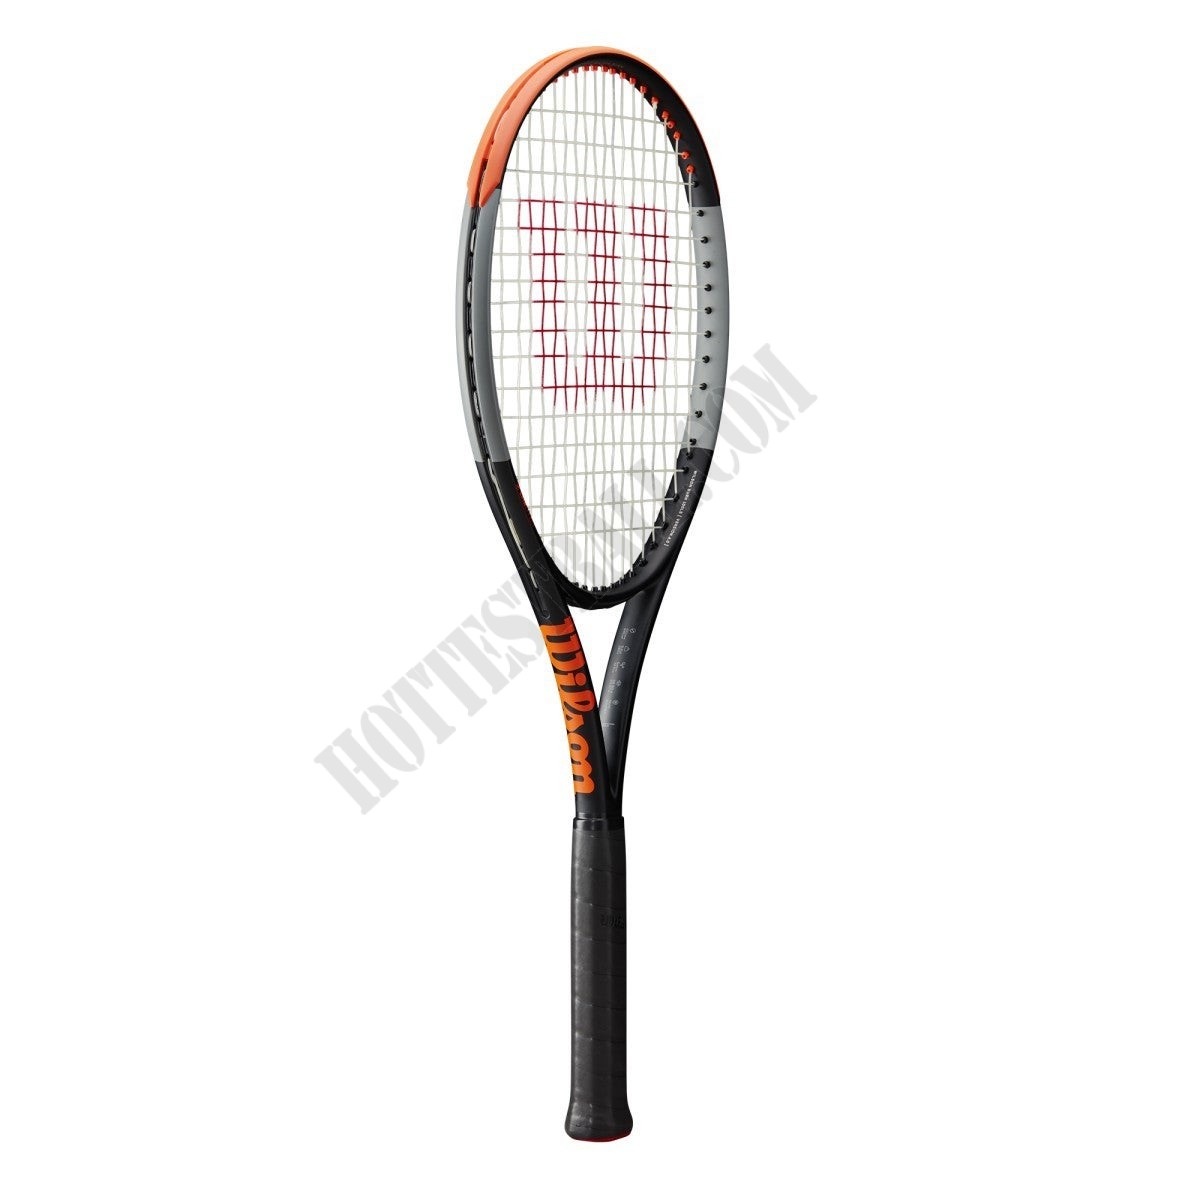 Burn 100LS v4 Tennis Racket - Wilson Discount Store - Burn 100LS v4 Tennis Racket - Wilson Discount Store